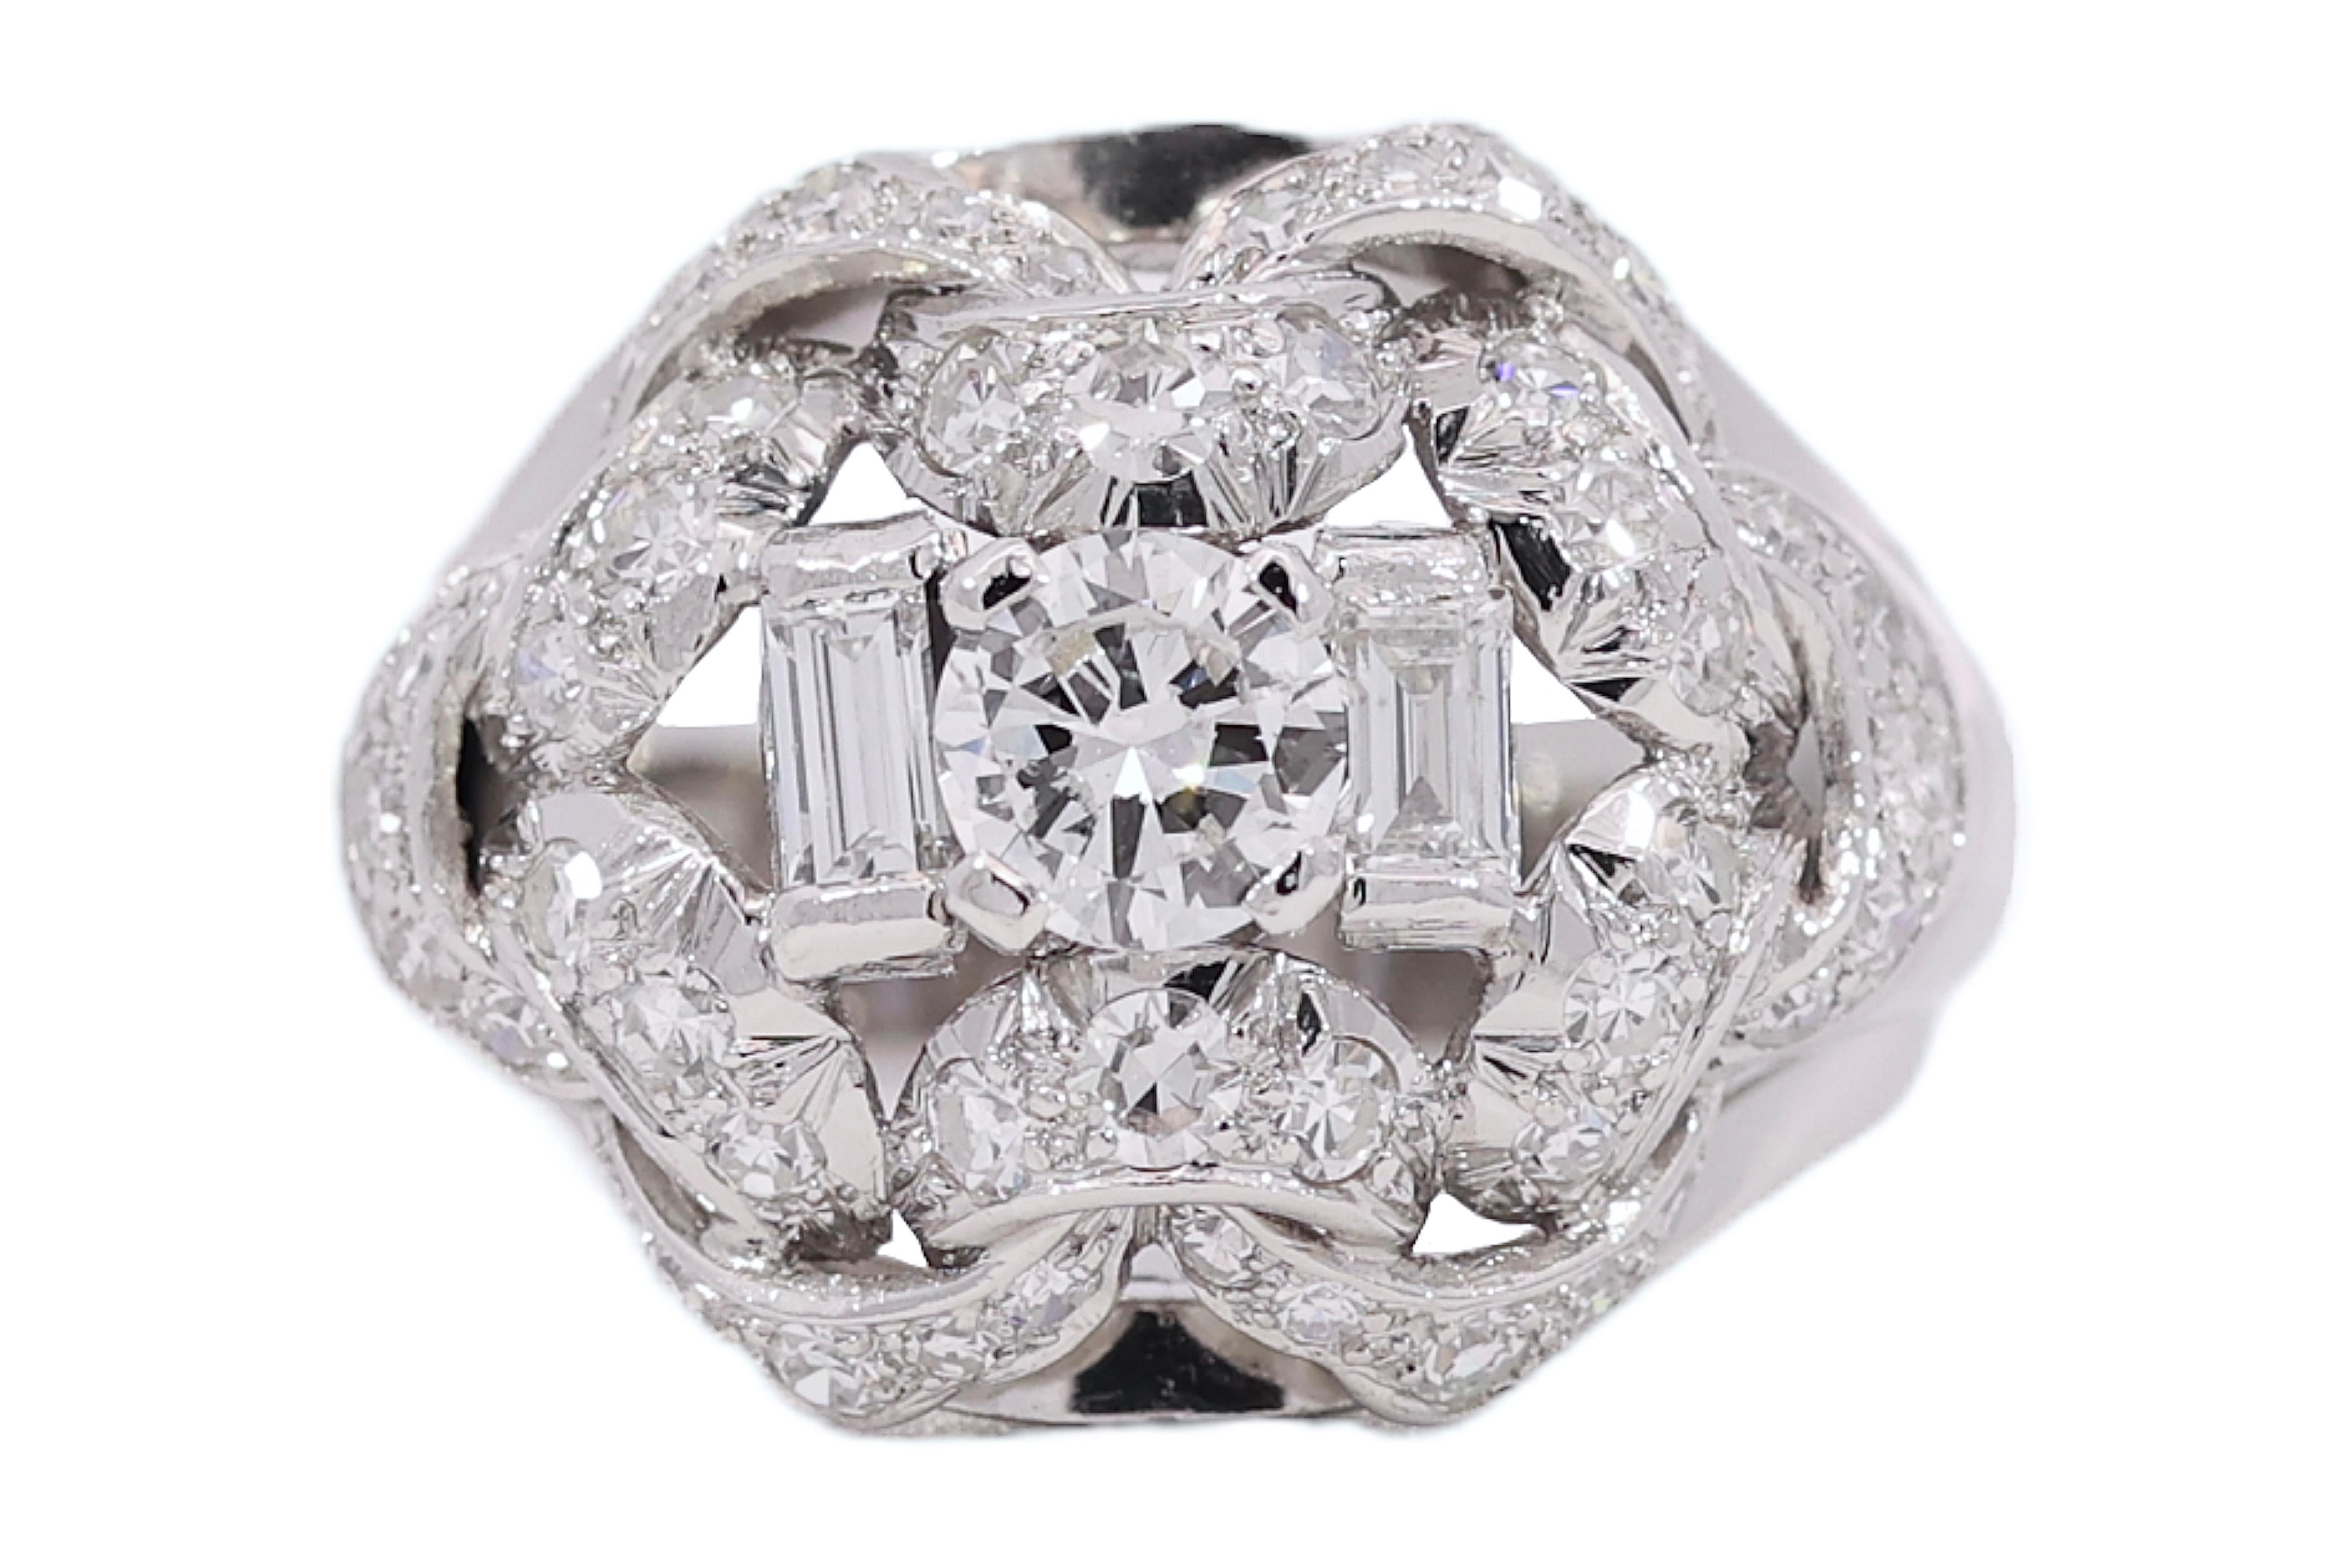 Gorgeous Art Deco Platinum Ring with Approx. 1.54 ct. Diamonds 

Diamonds: Round cut centre diamond approx. 0.50 ct. 
baguette cut diamonds together approx. 0.28 ct.
Surrounded eight cut diamonds, together approx. 0.76 ct.

Material: Platinum

Ring